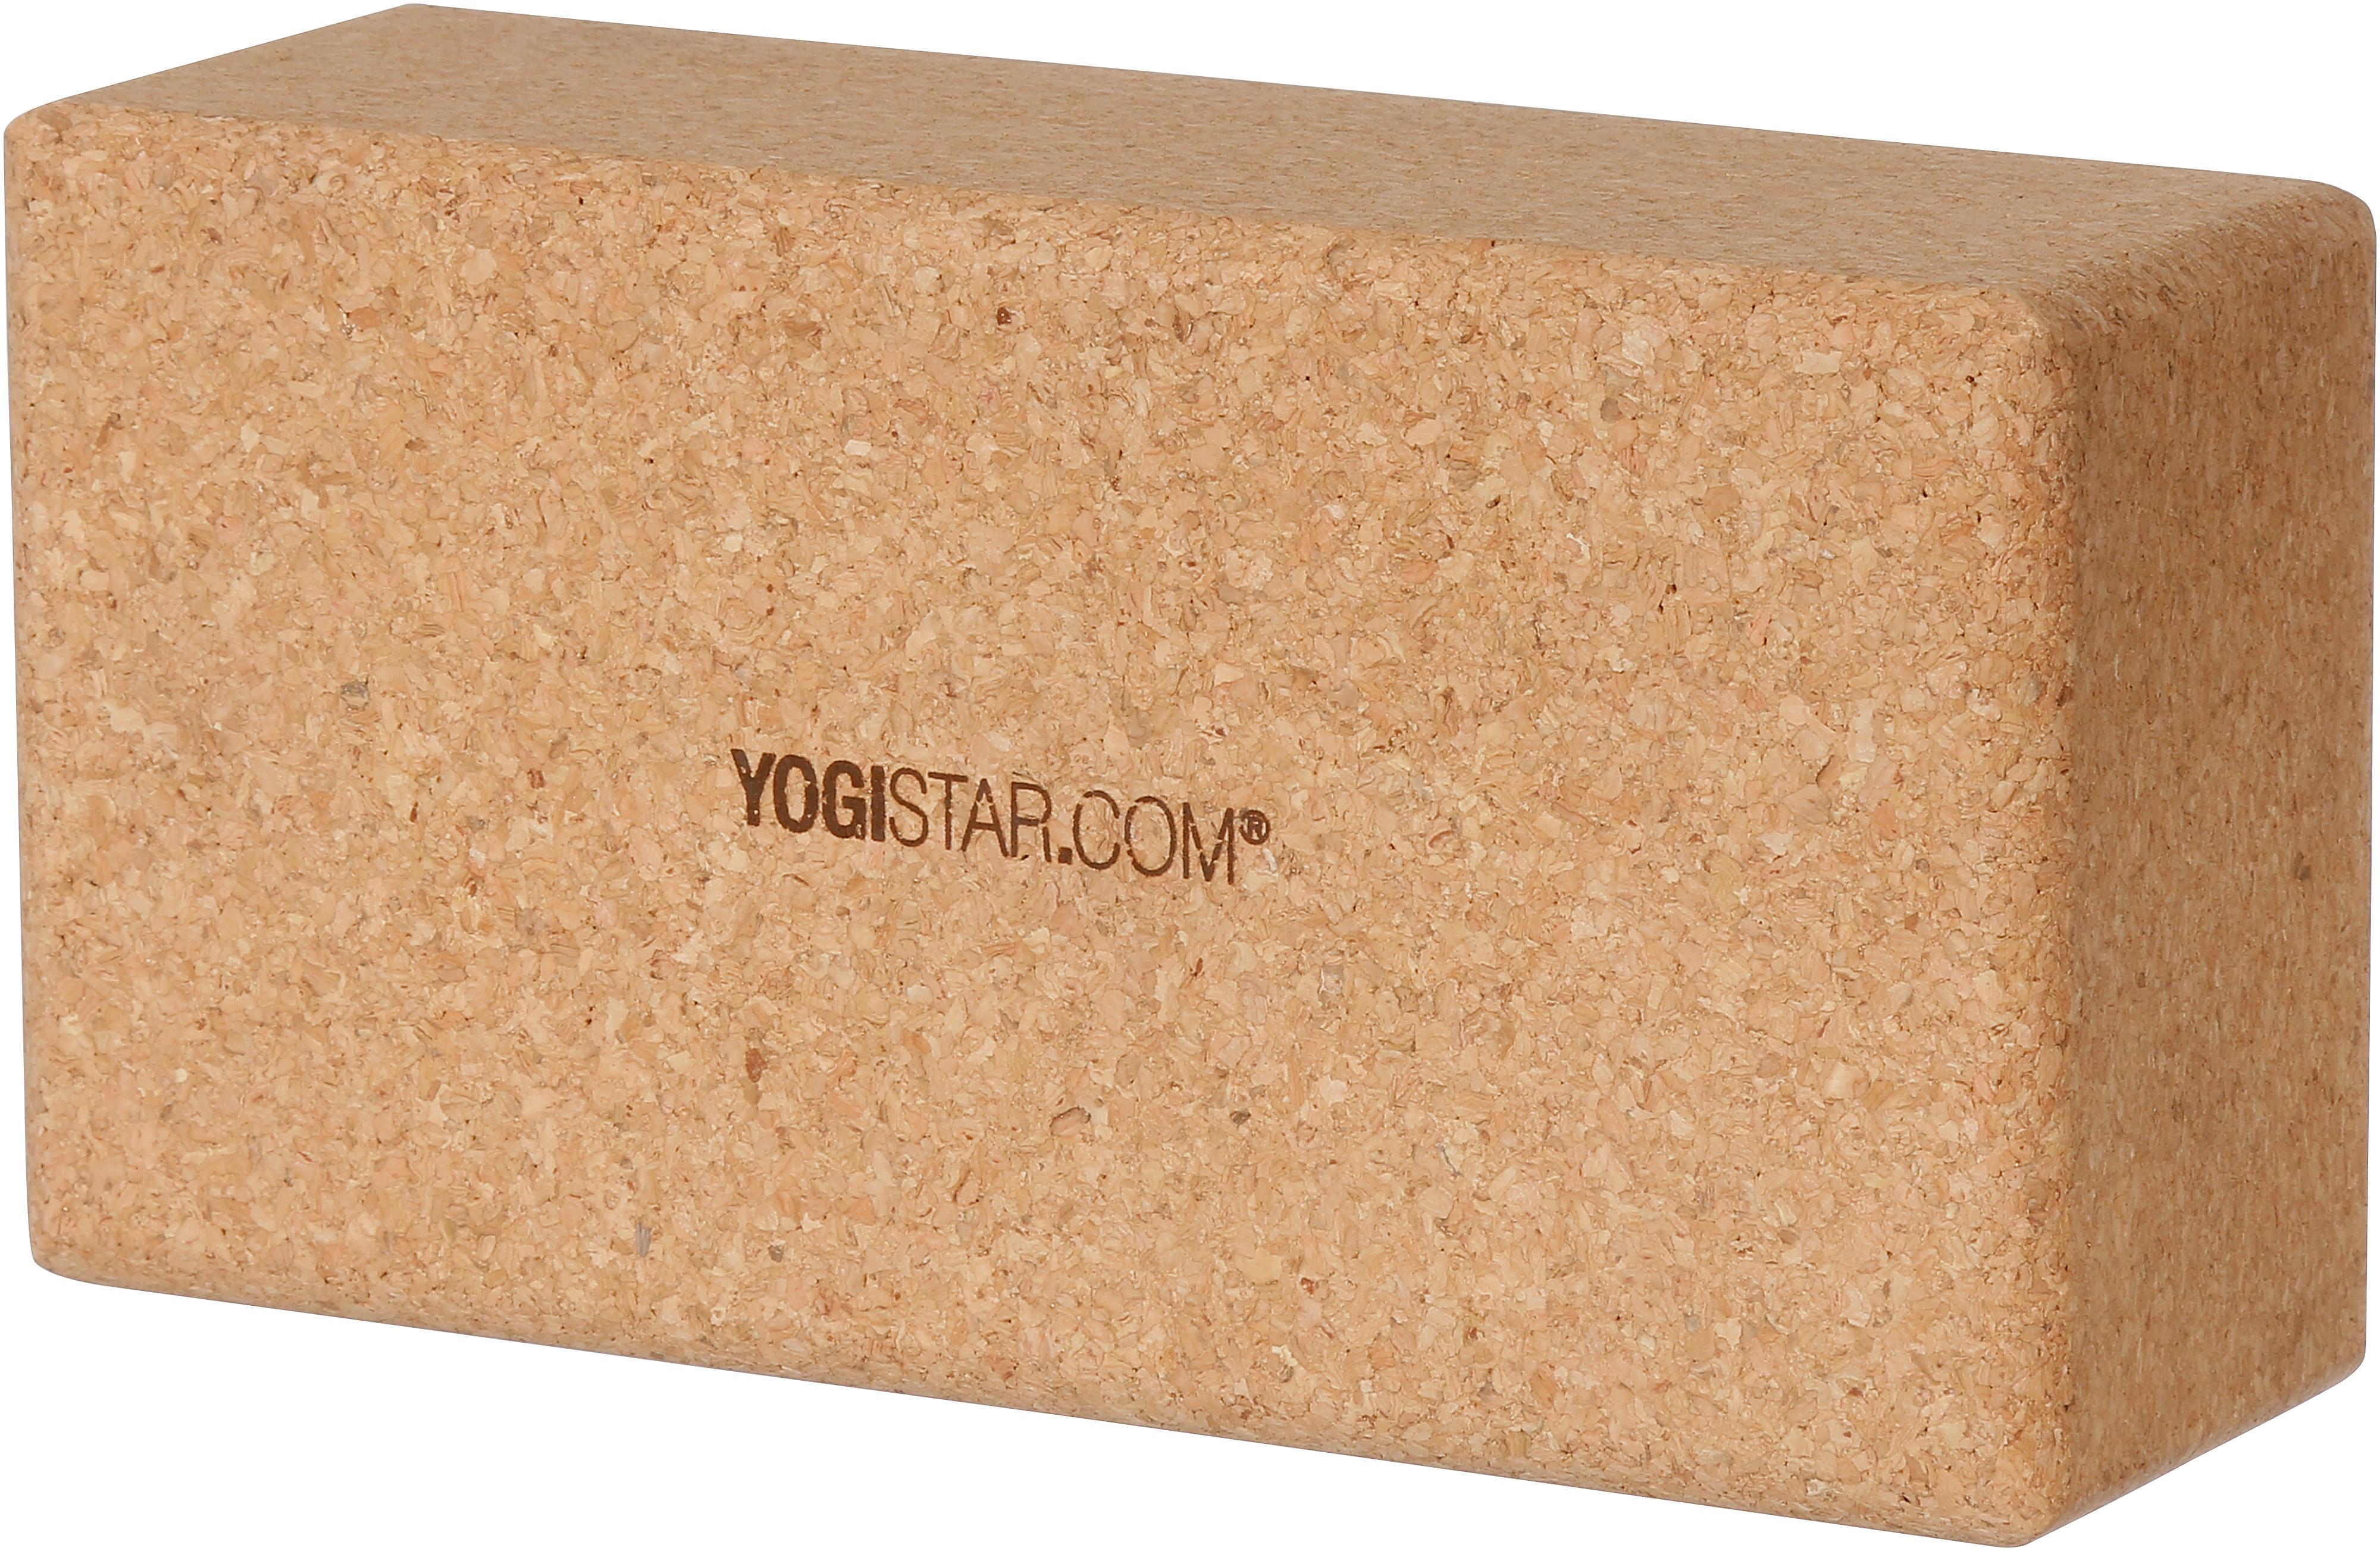 Image of YOGISTAR.COM Yoga Block